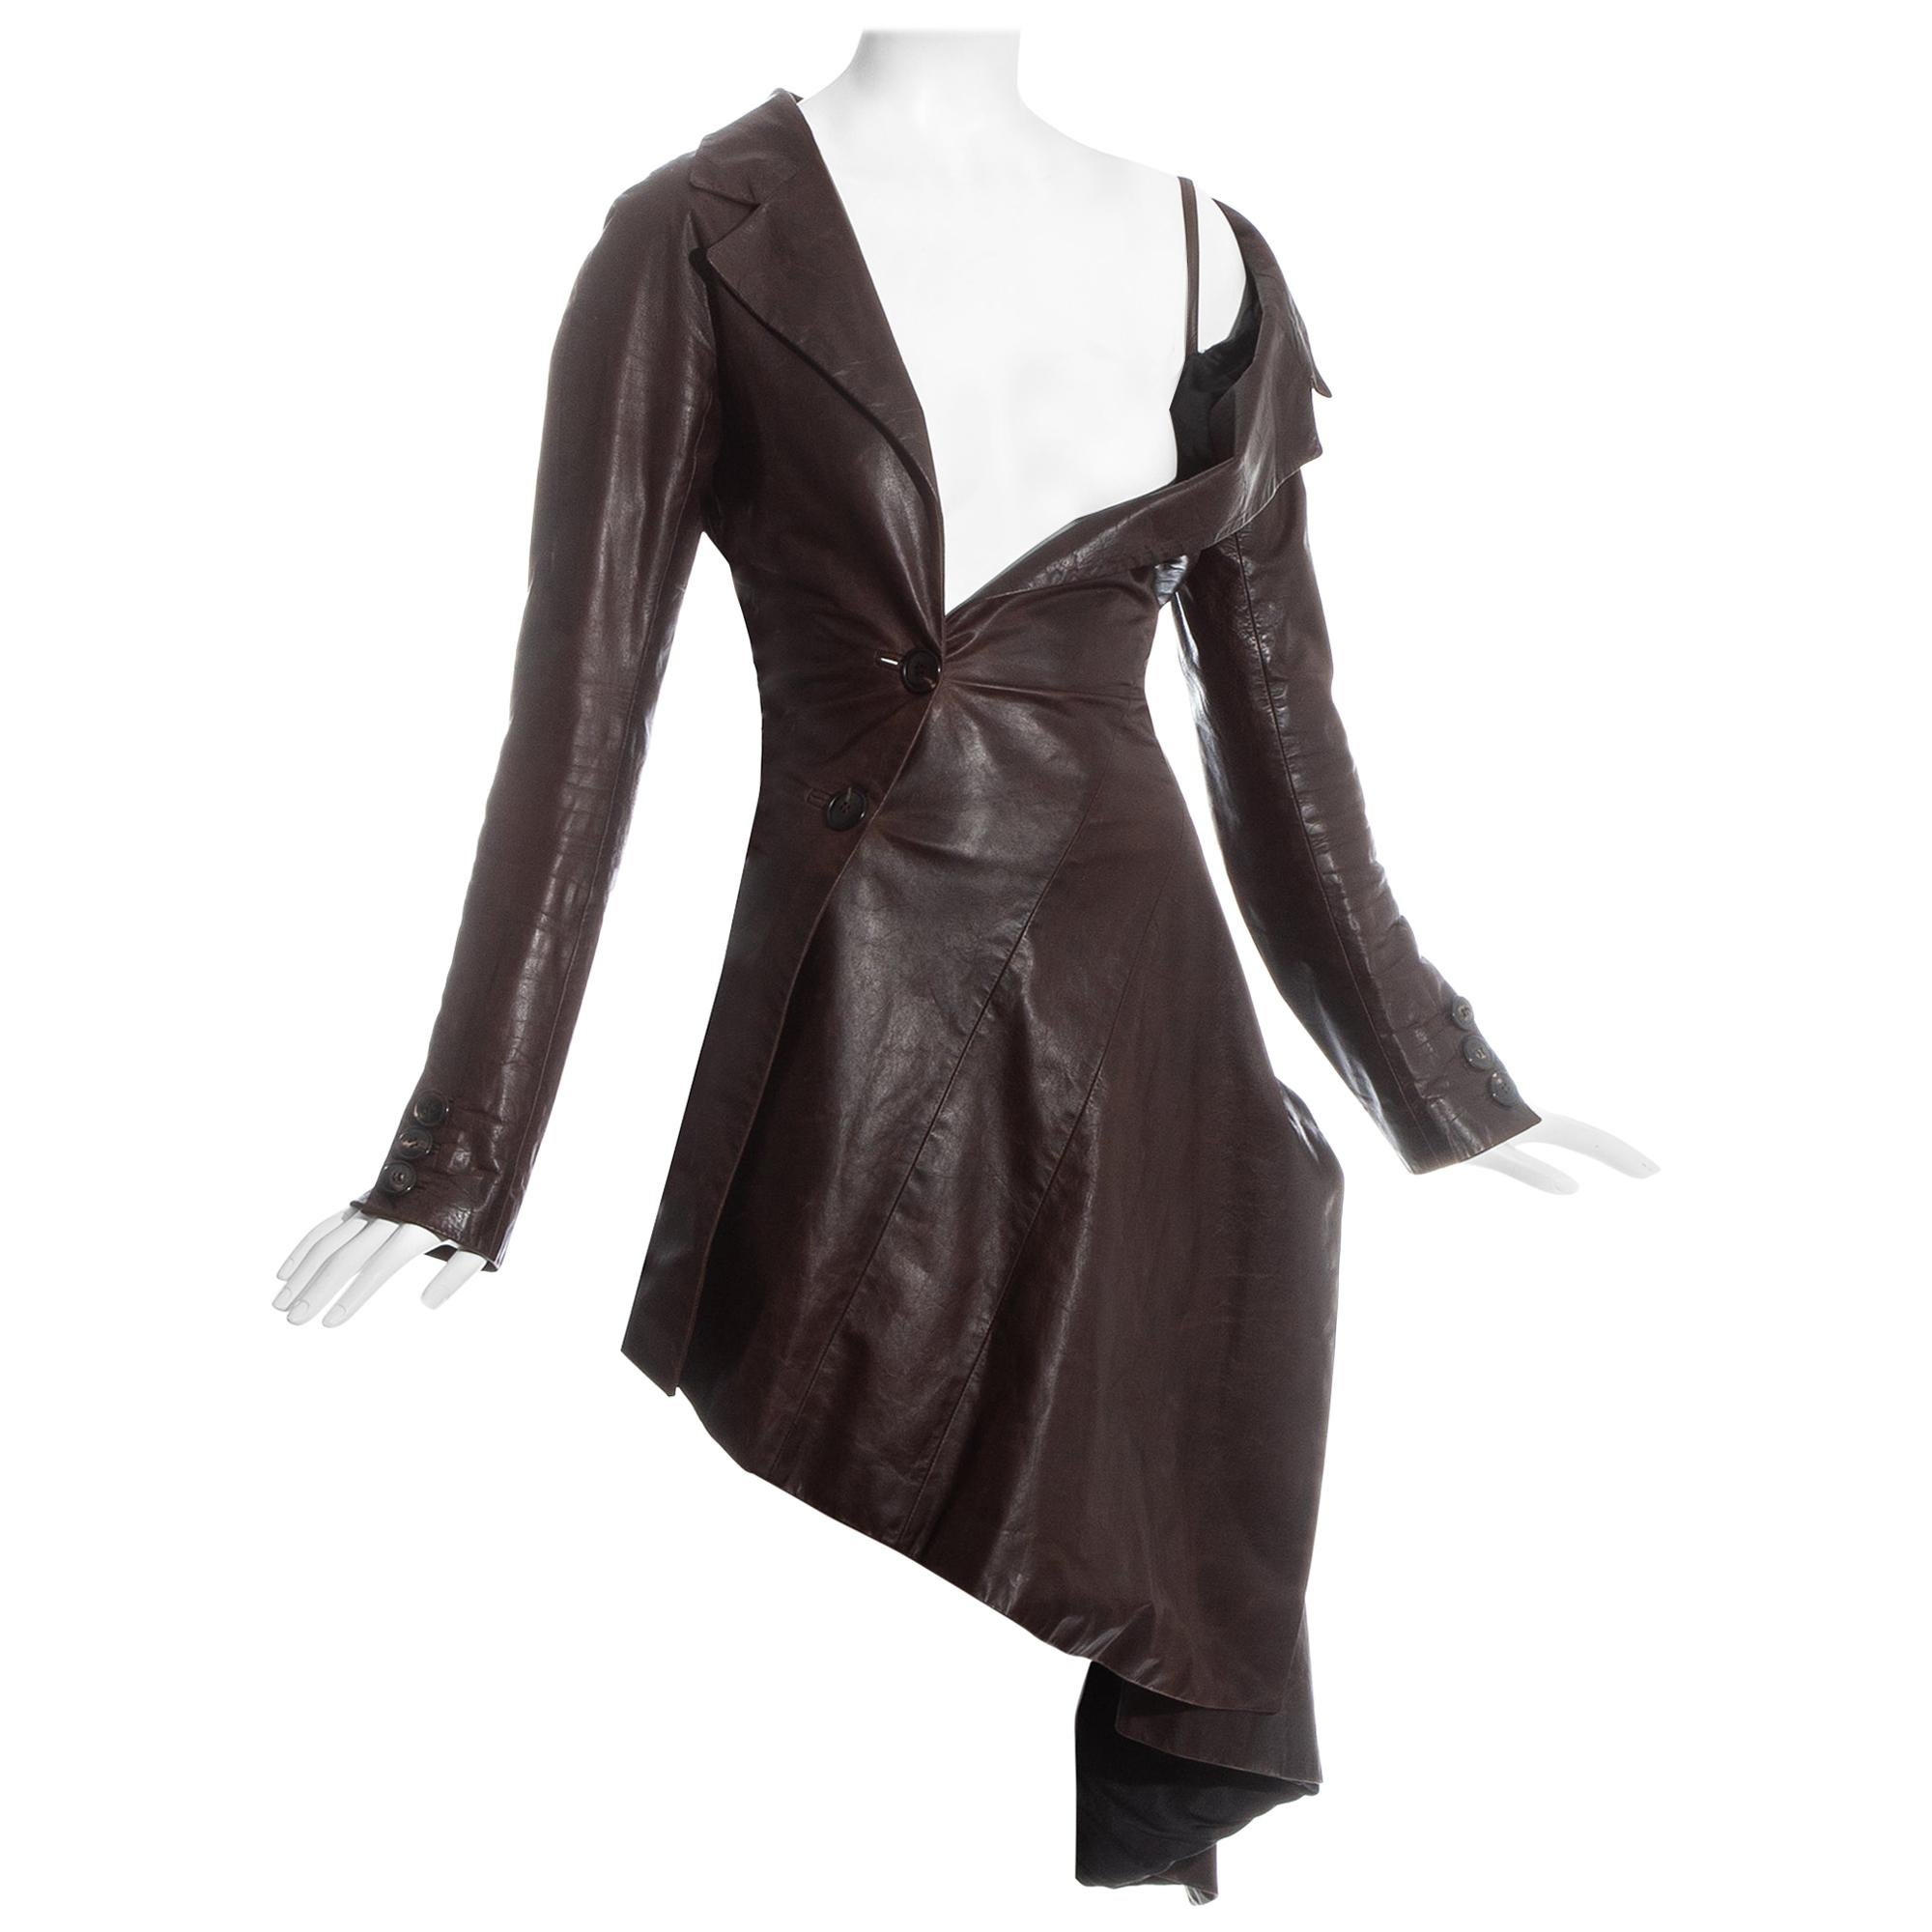 John Galliano brown bias cut leather twisted coat dress, fw 2000